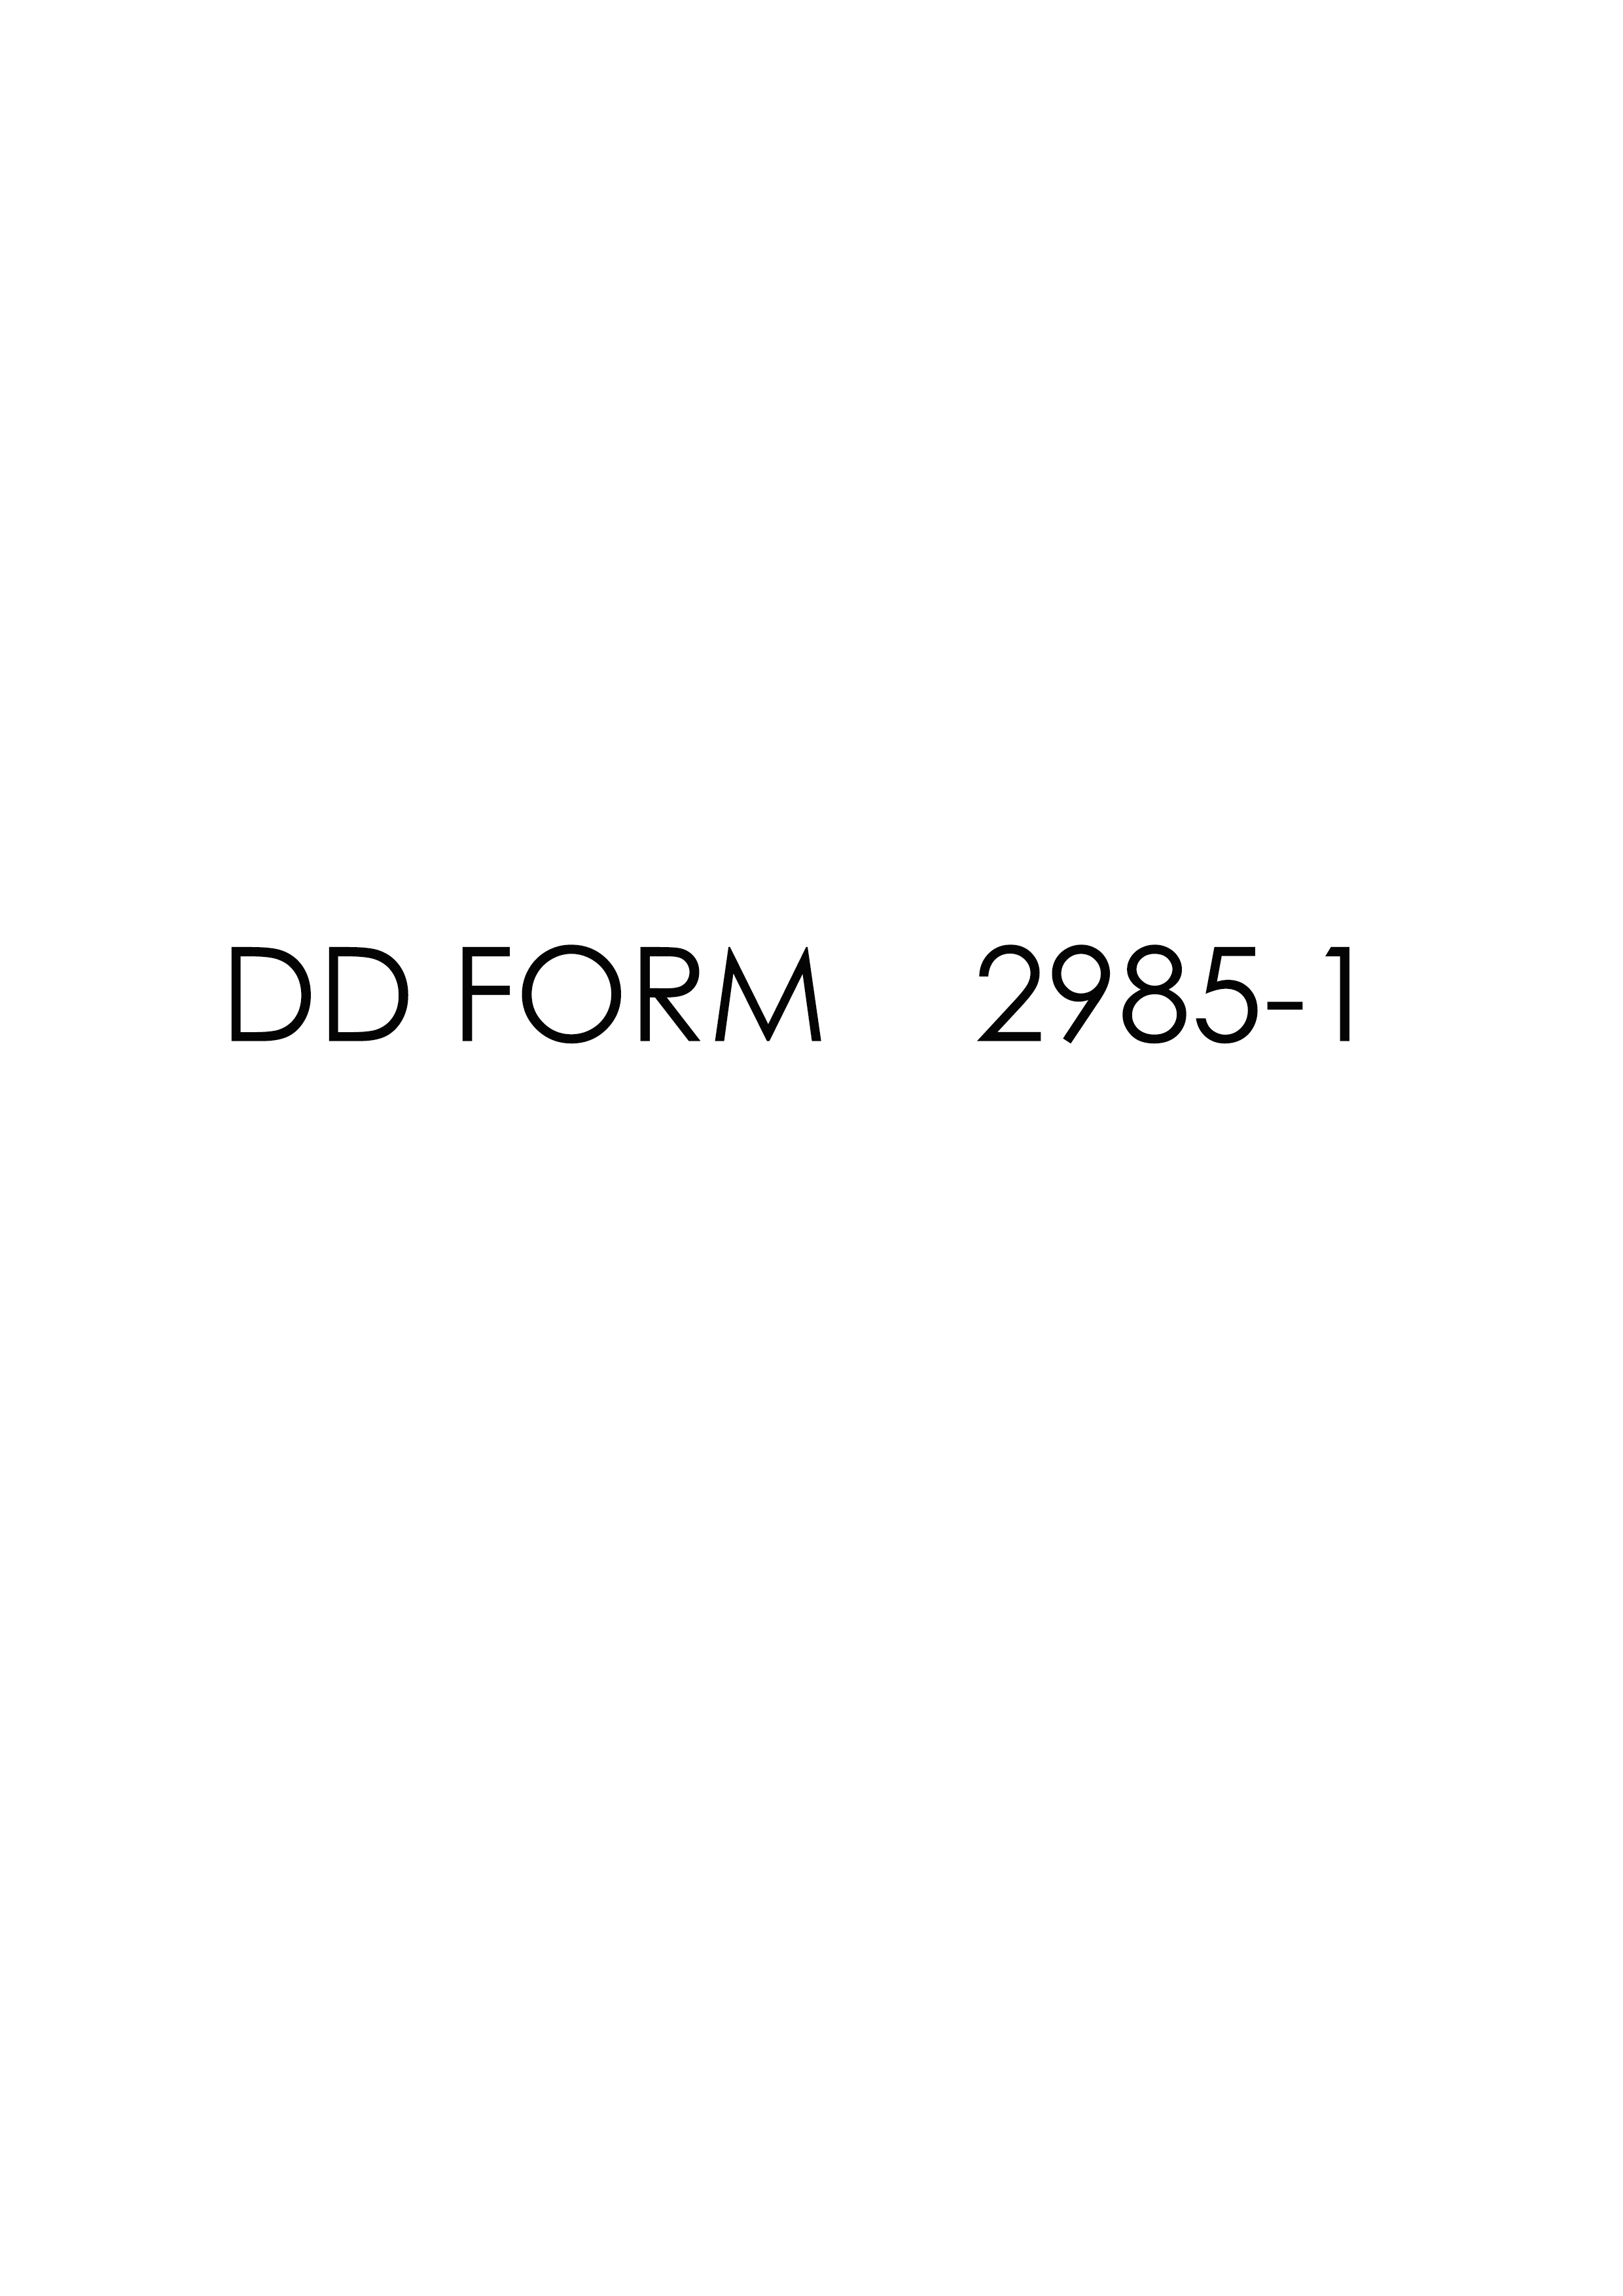 Download dd form 2985-1